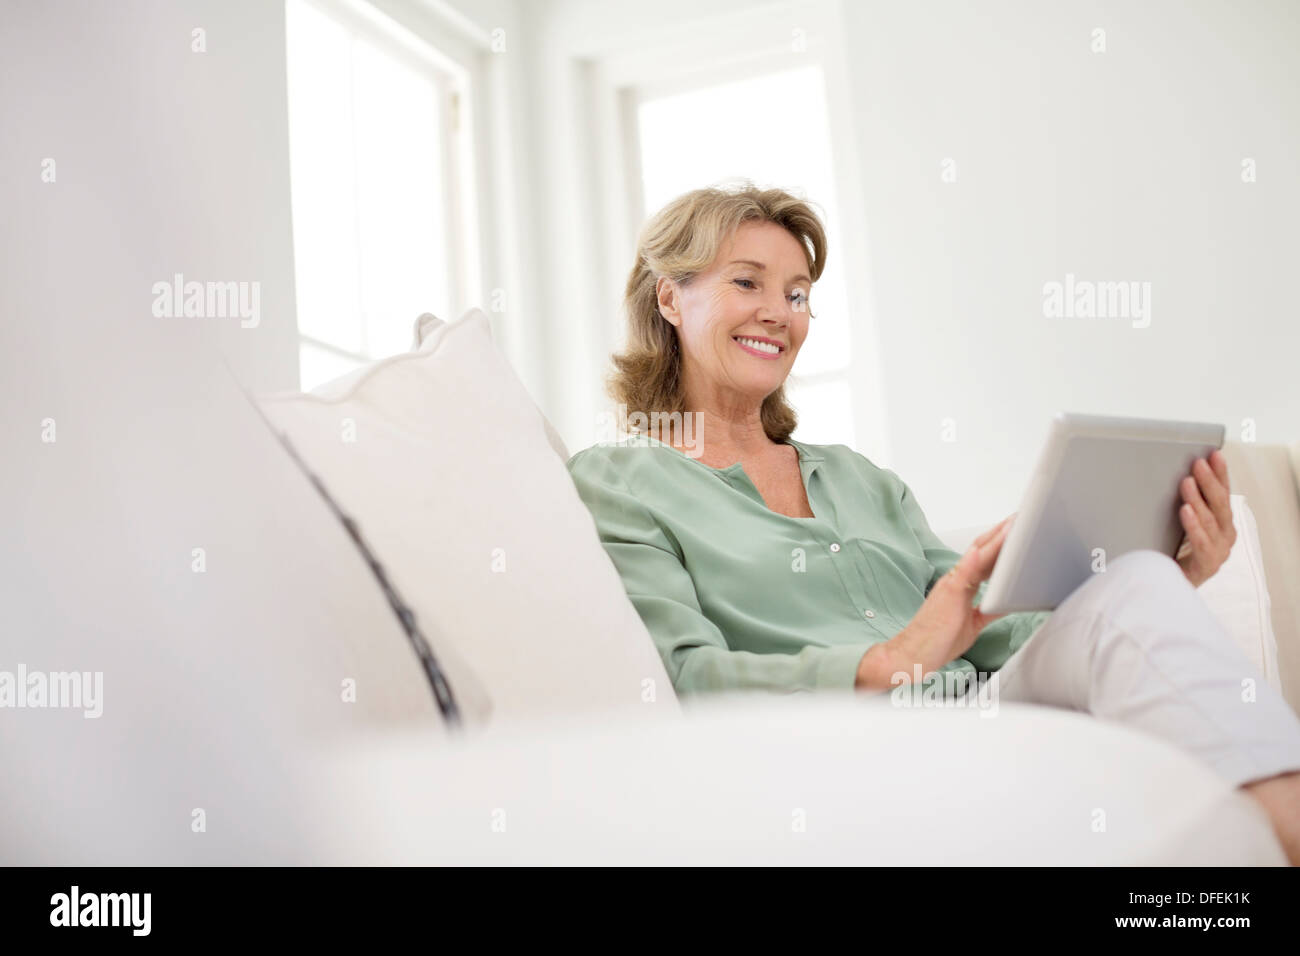 Senior woman using digital tablet on sofa Stock Photo